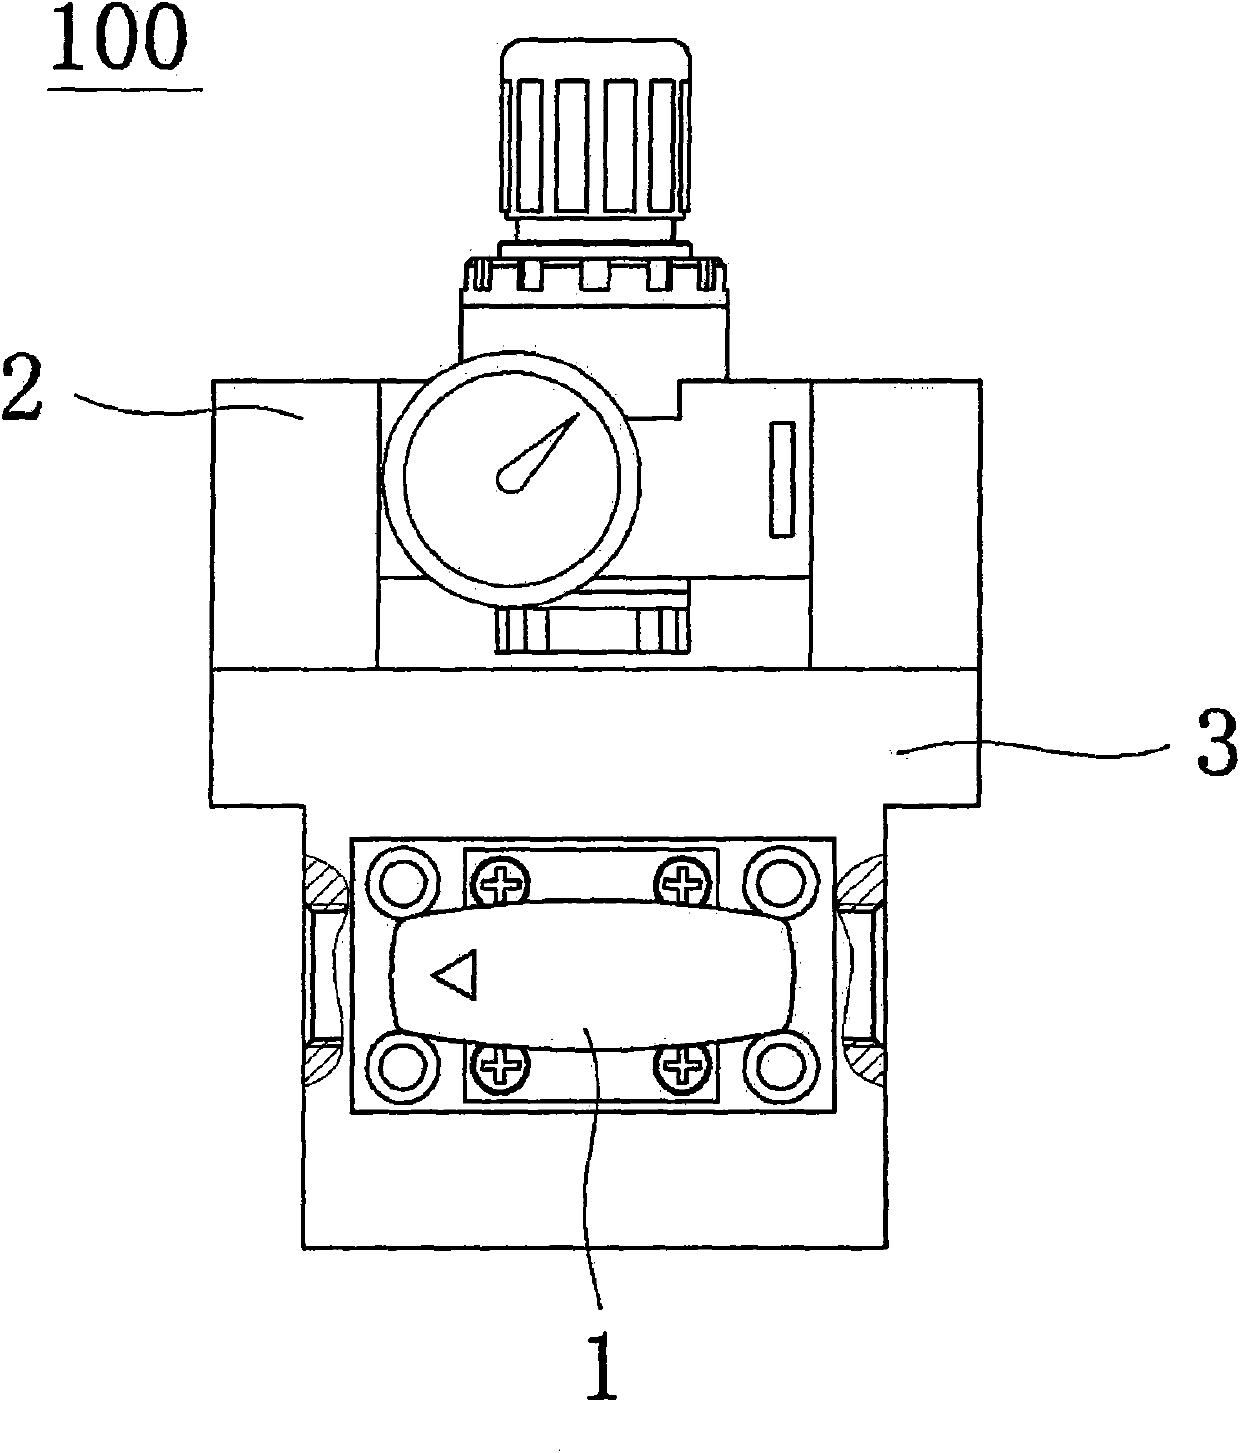 Sanding pressure control regulator